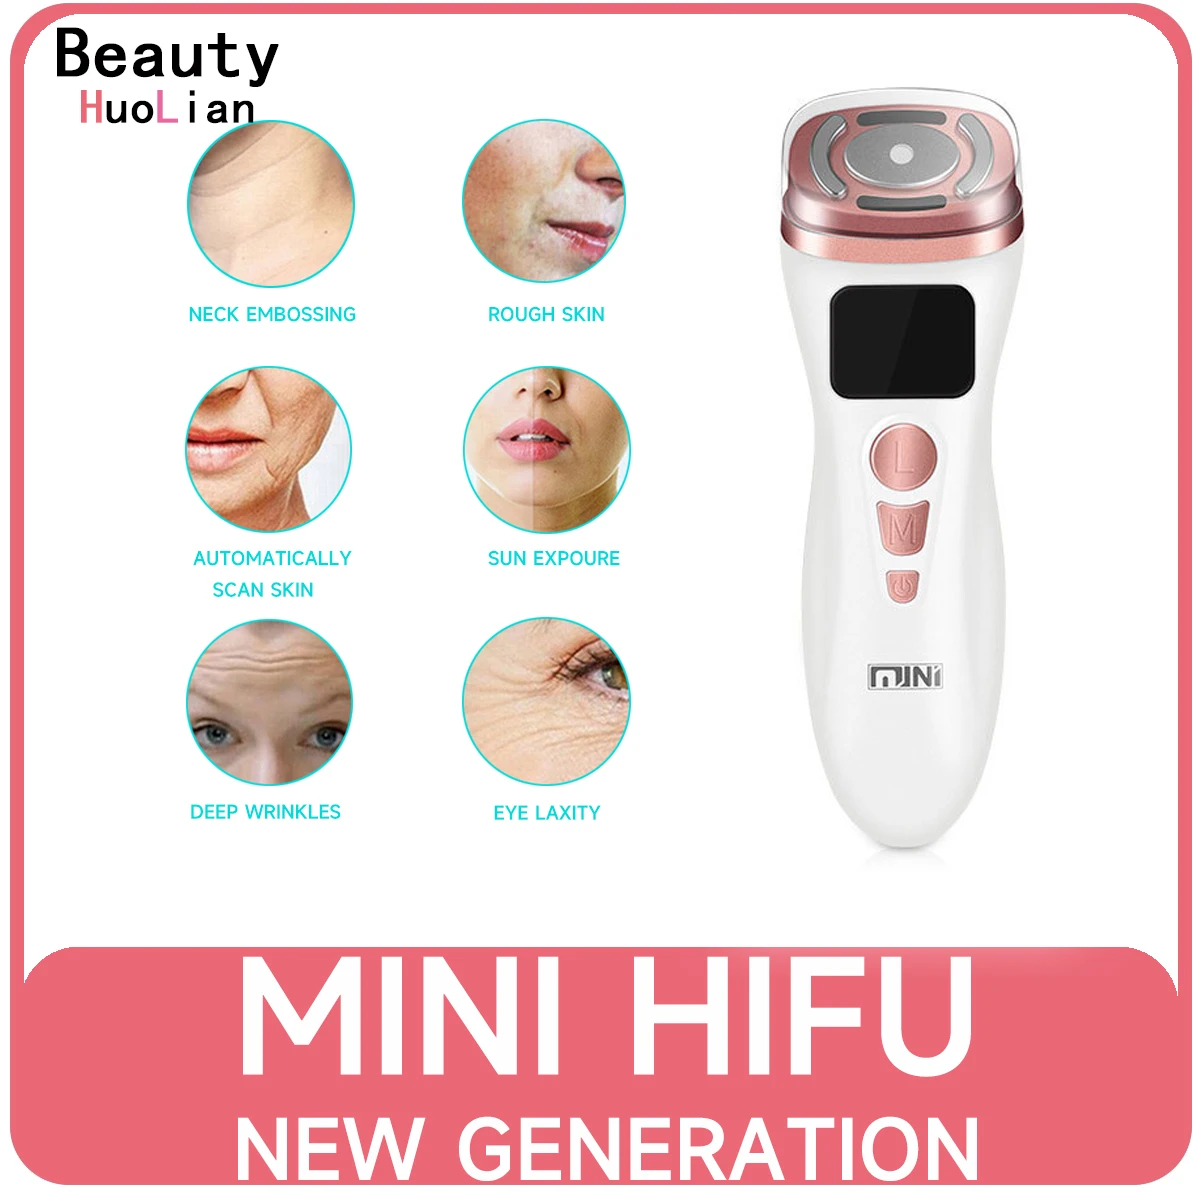 2nd Generation Mini HIFU Machine Ultrasound RF EMS Facial Beauty Device Face Massager Neck Lifting Tightening Rejuvenation Tool